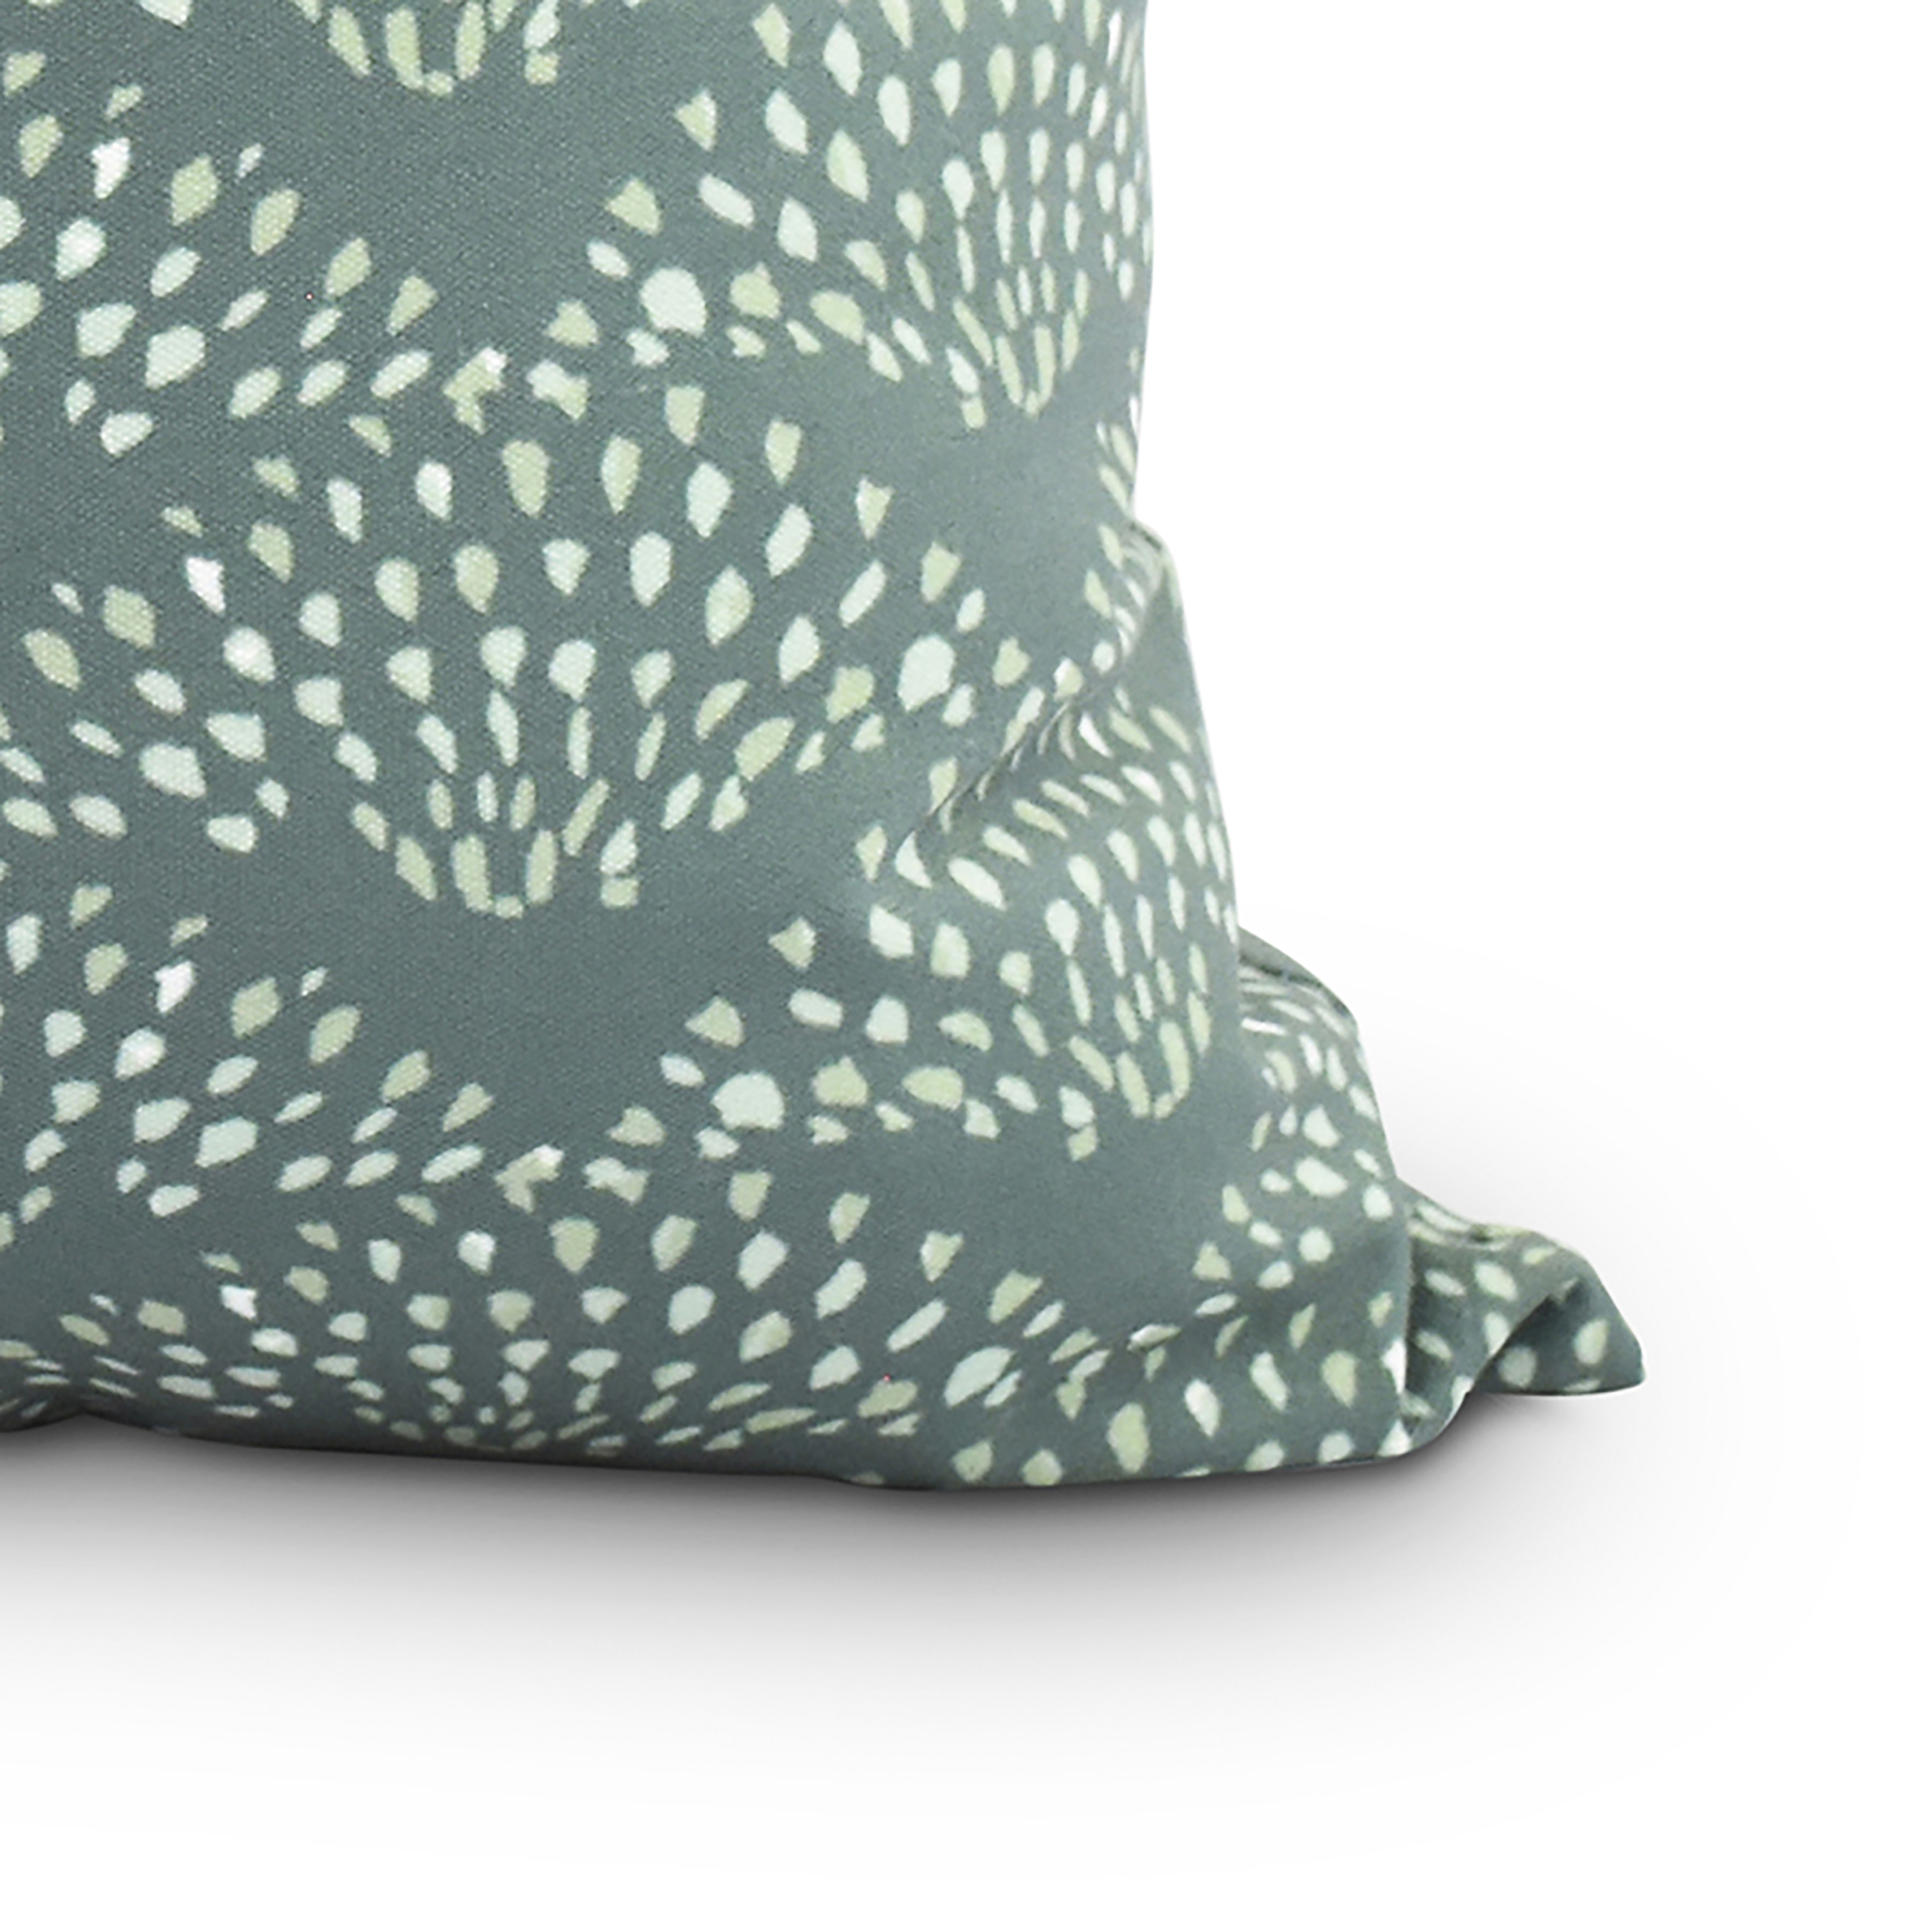 Simply Daisy, 16" x 16" Fan Dance Green Geometric Print Decorative Outdoor Throw Pillow - image 2 of 2